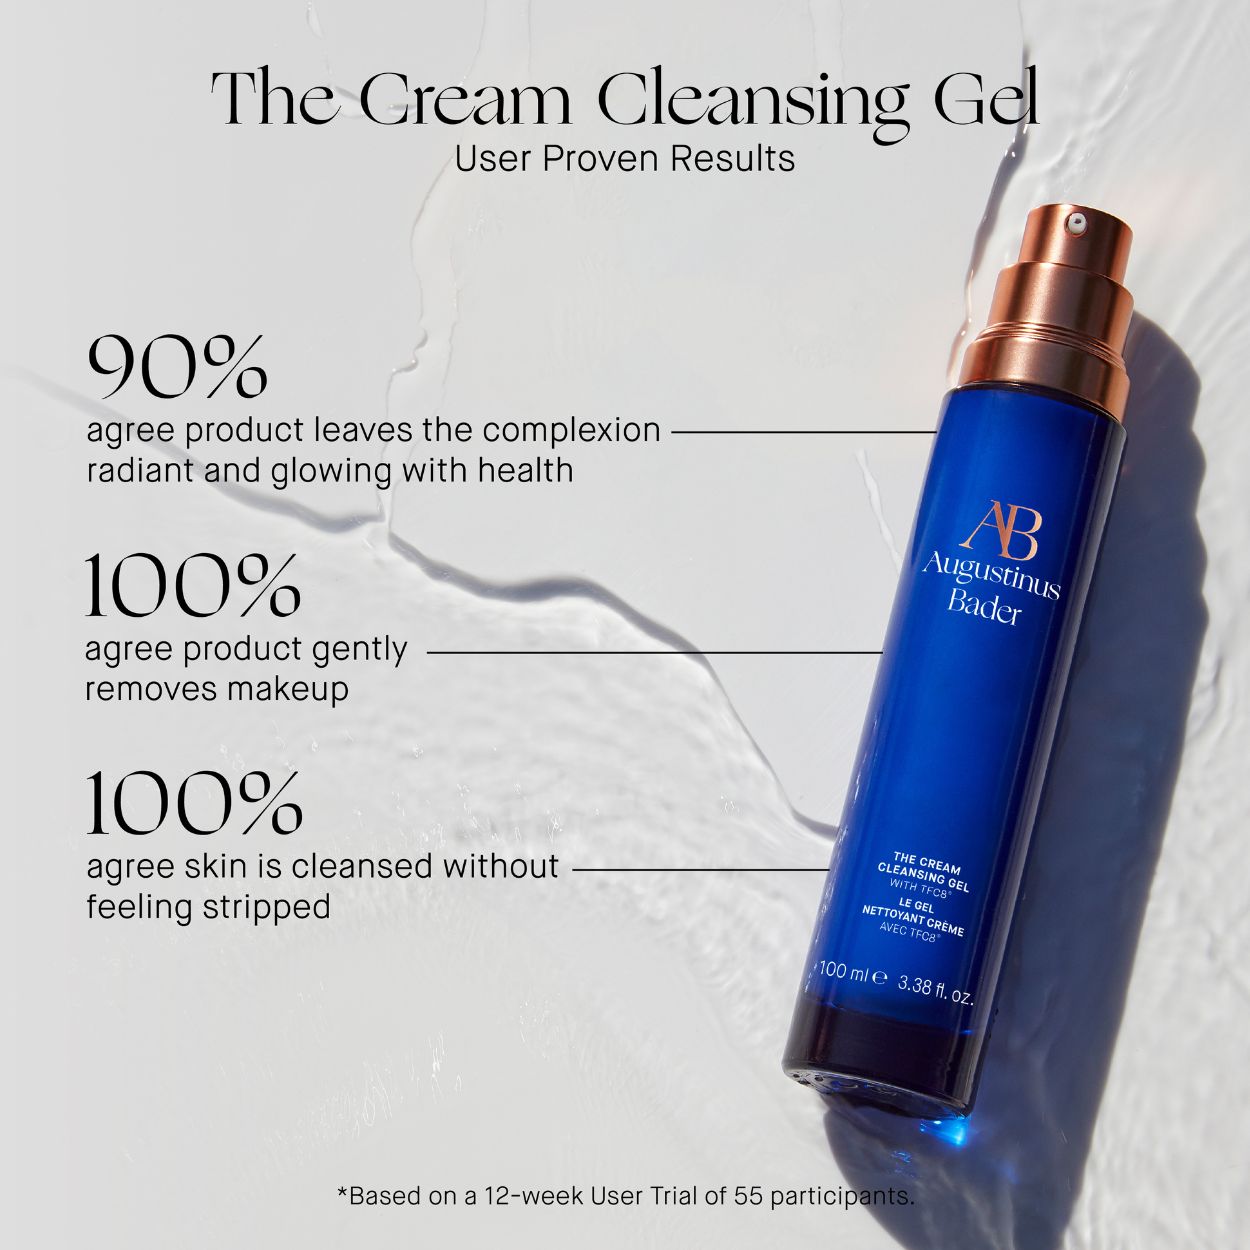 The Cream Cleansing Gel